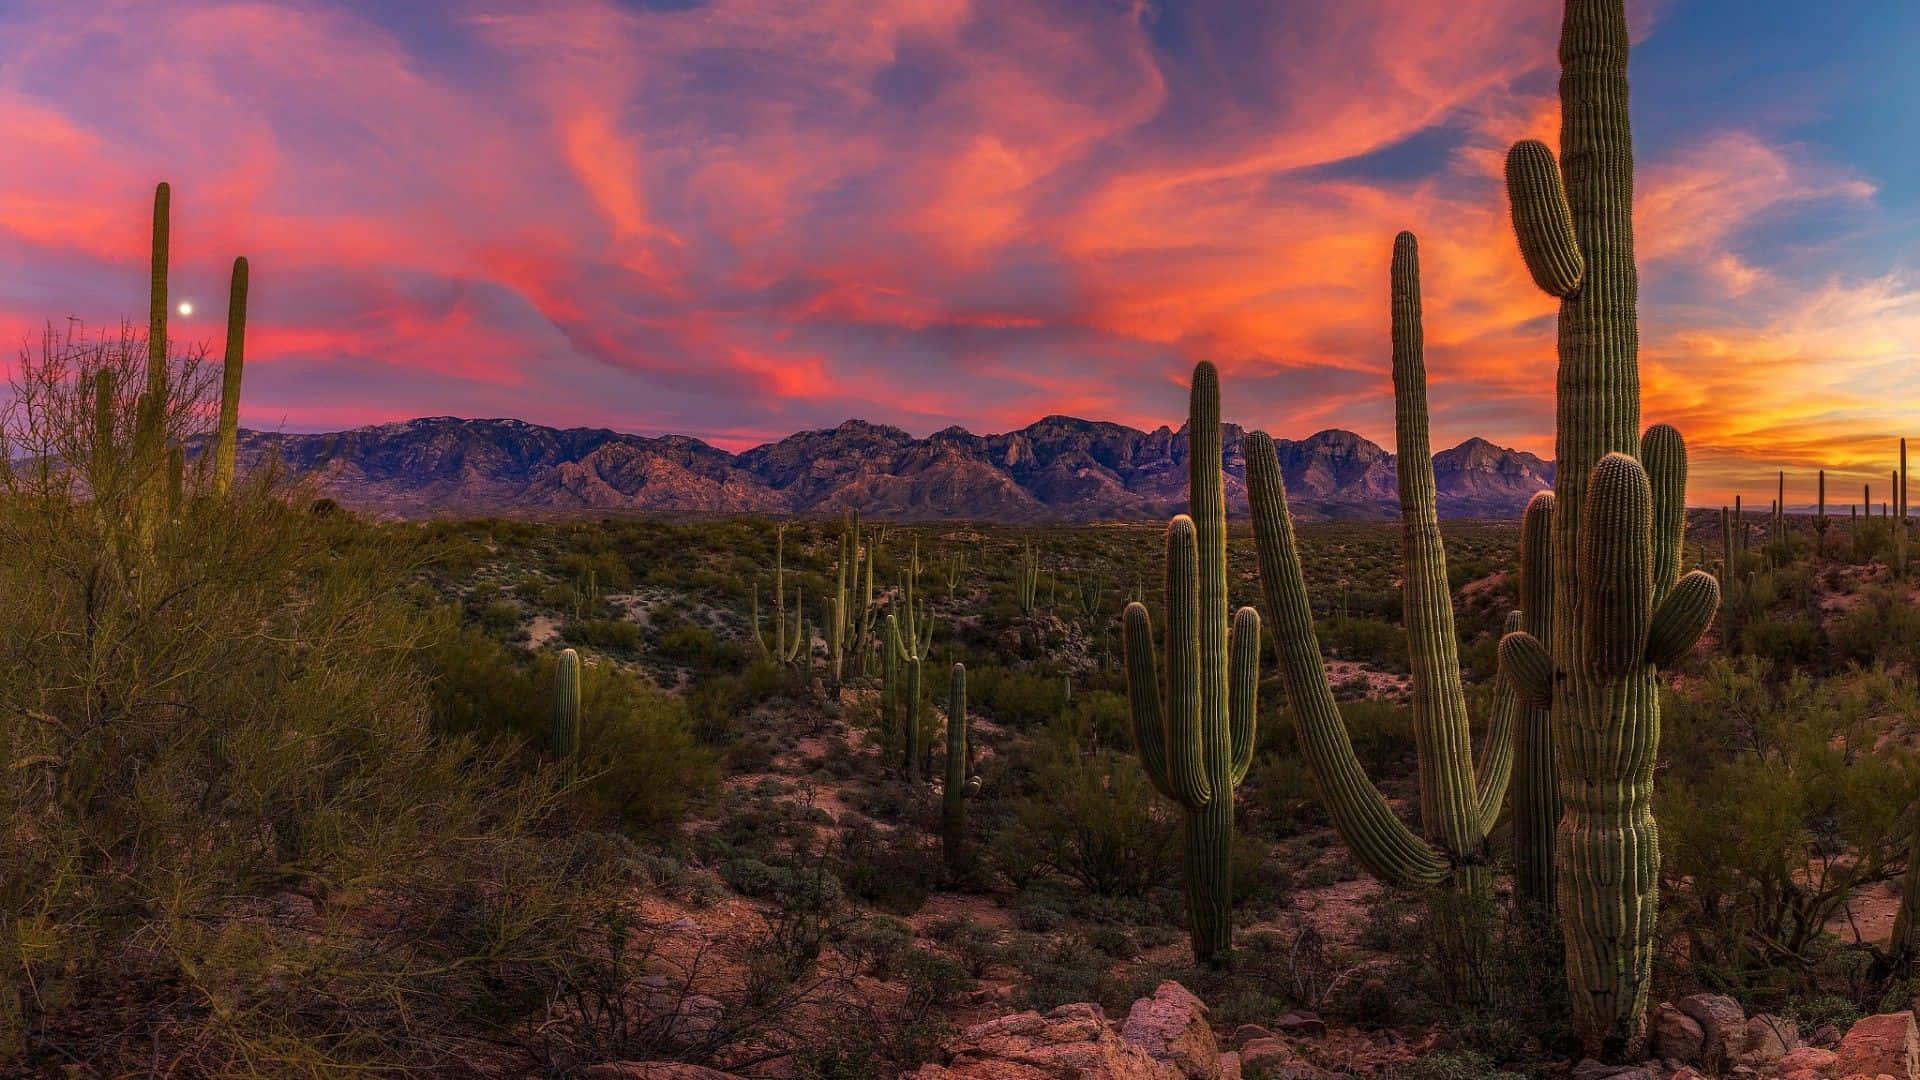 Desert paradise in Arizona